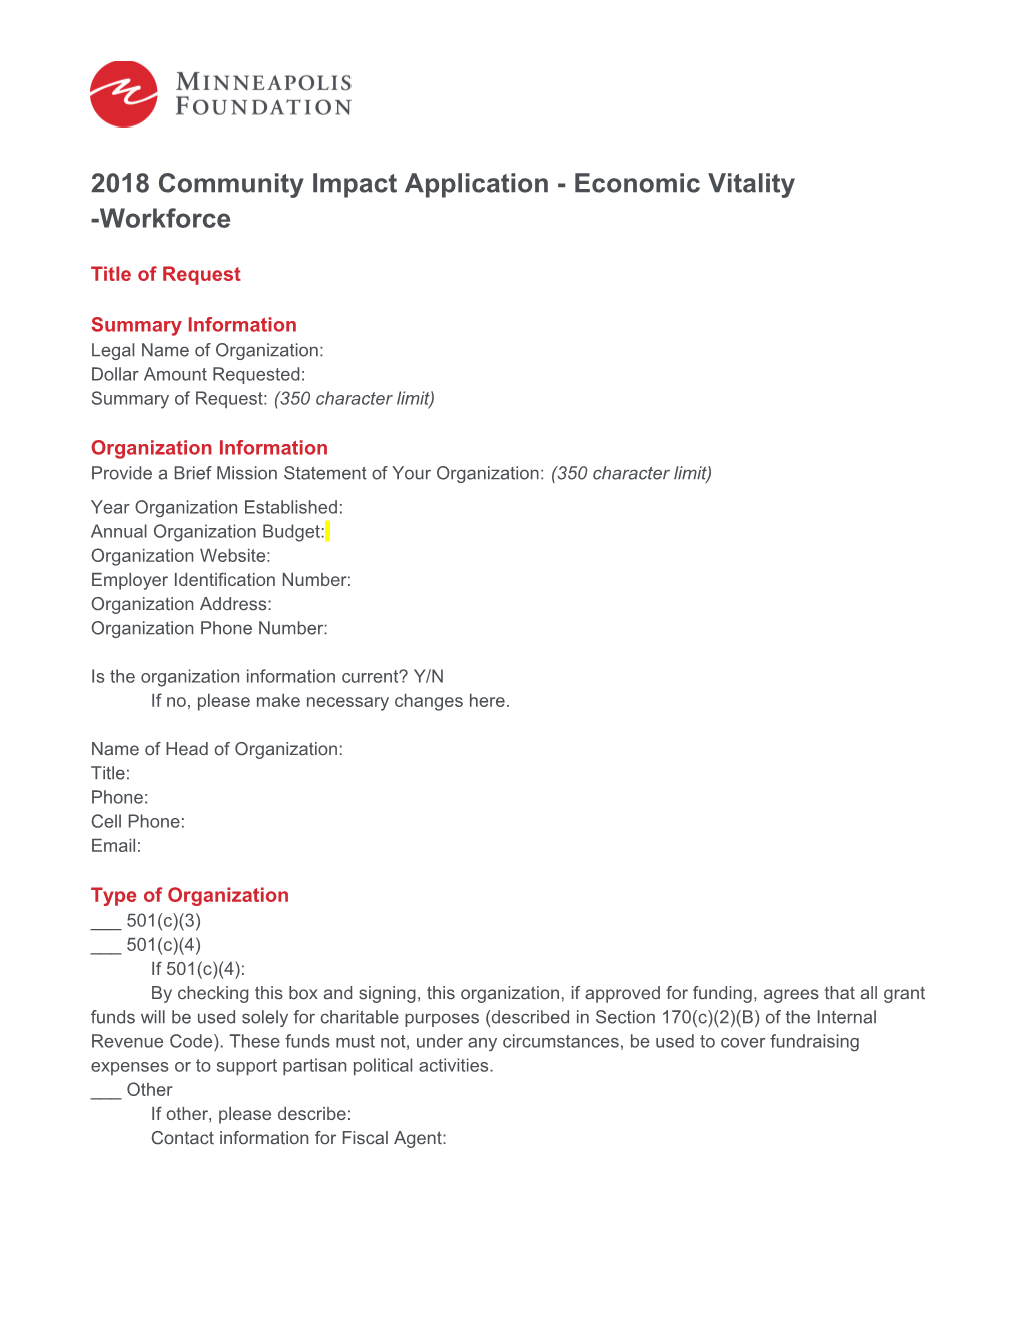 2018 Community Impact Application -Economic Vitality -Workforce